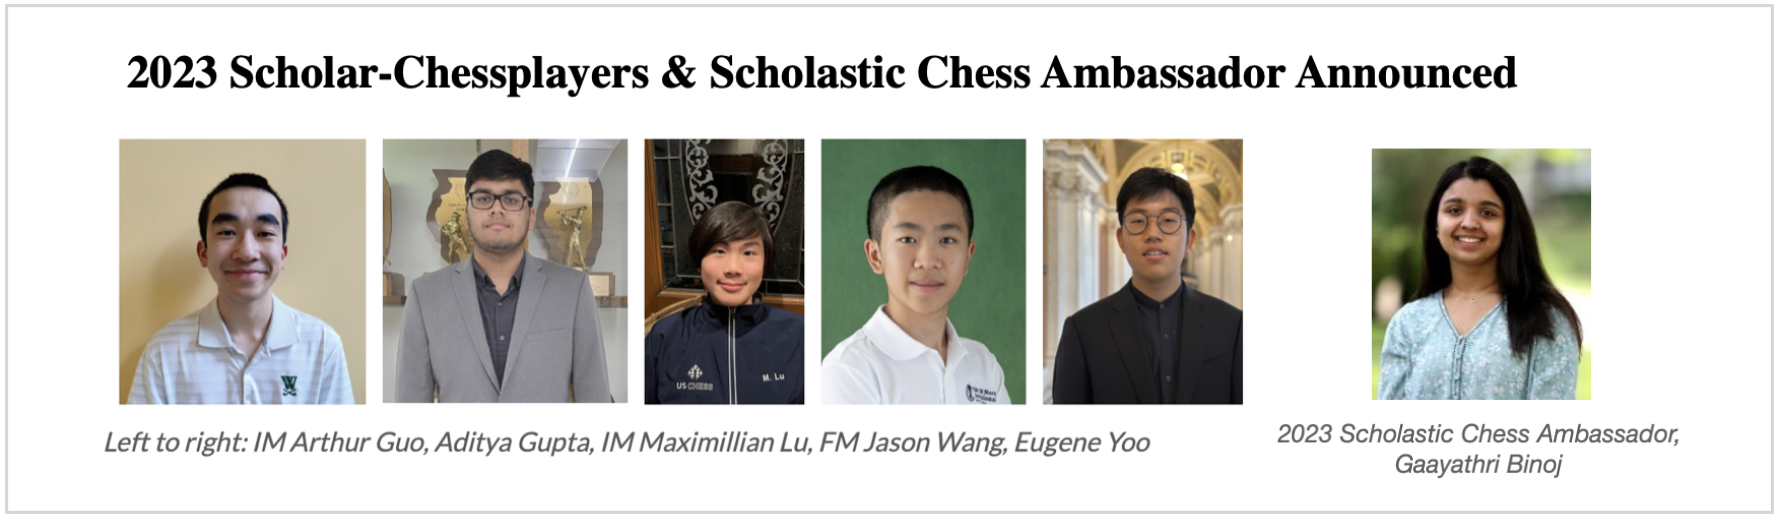 2023 Samford Fellowship Winners Announced – The U.S. Chess Trust